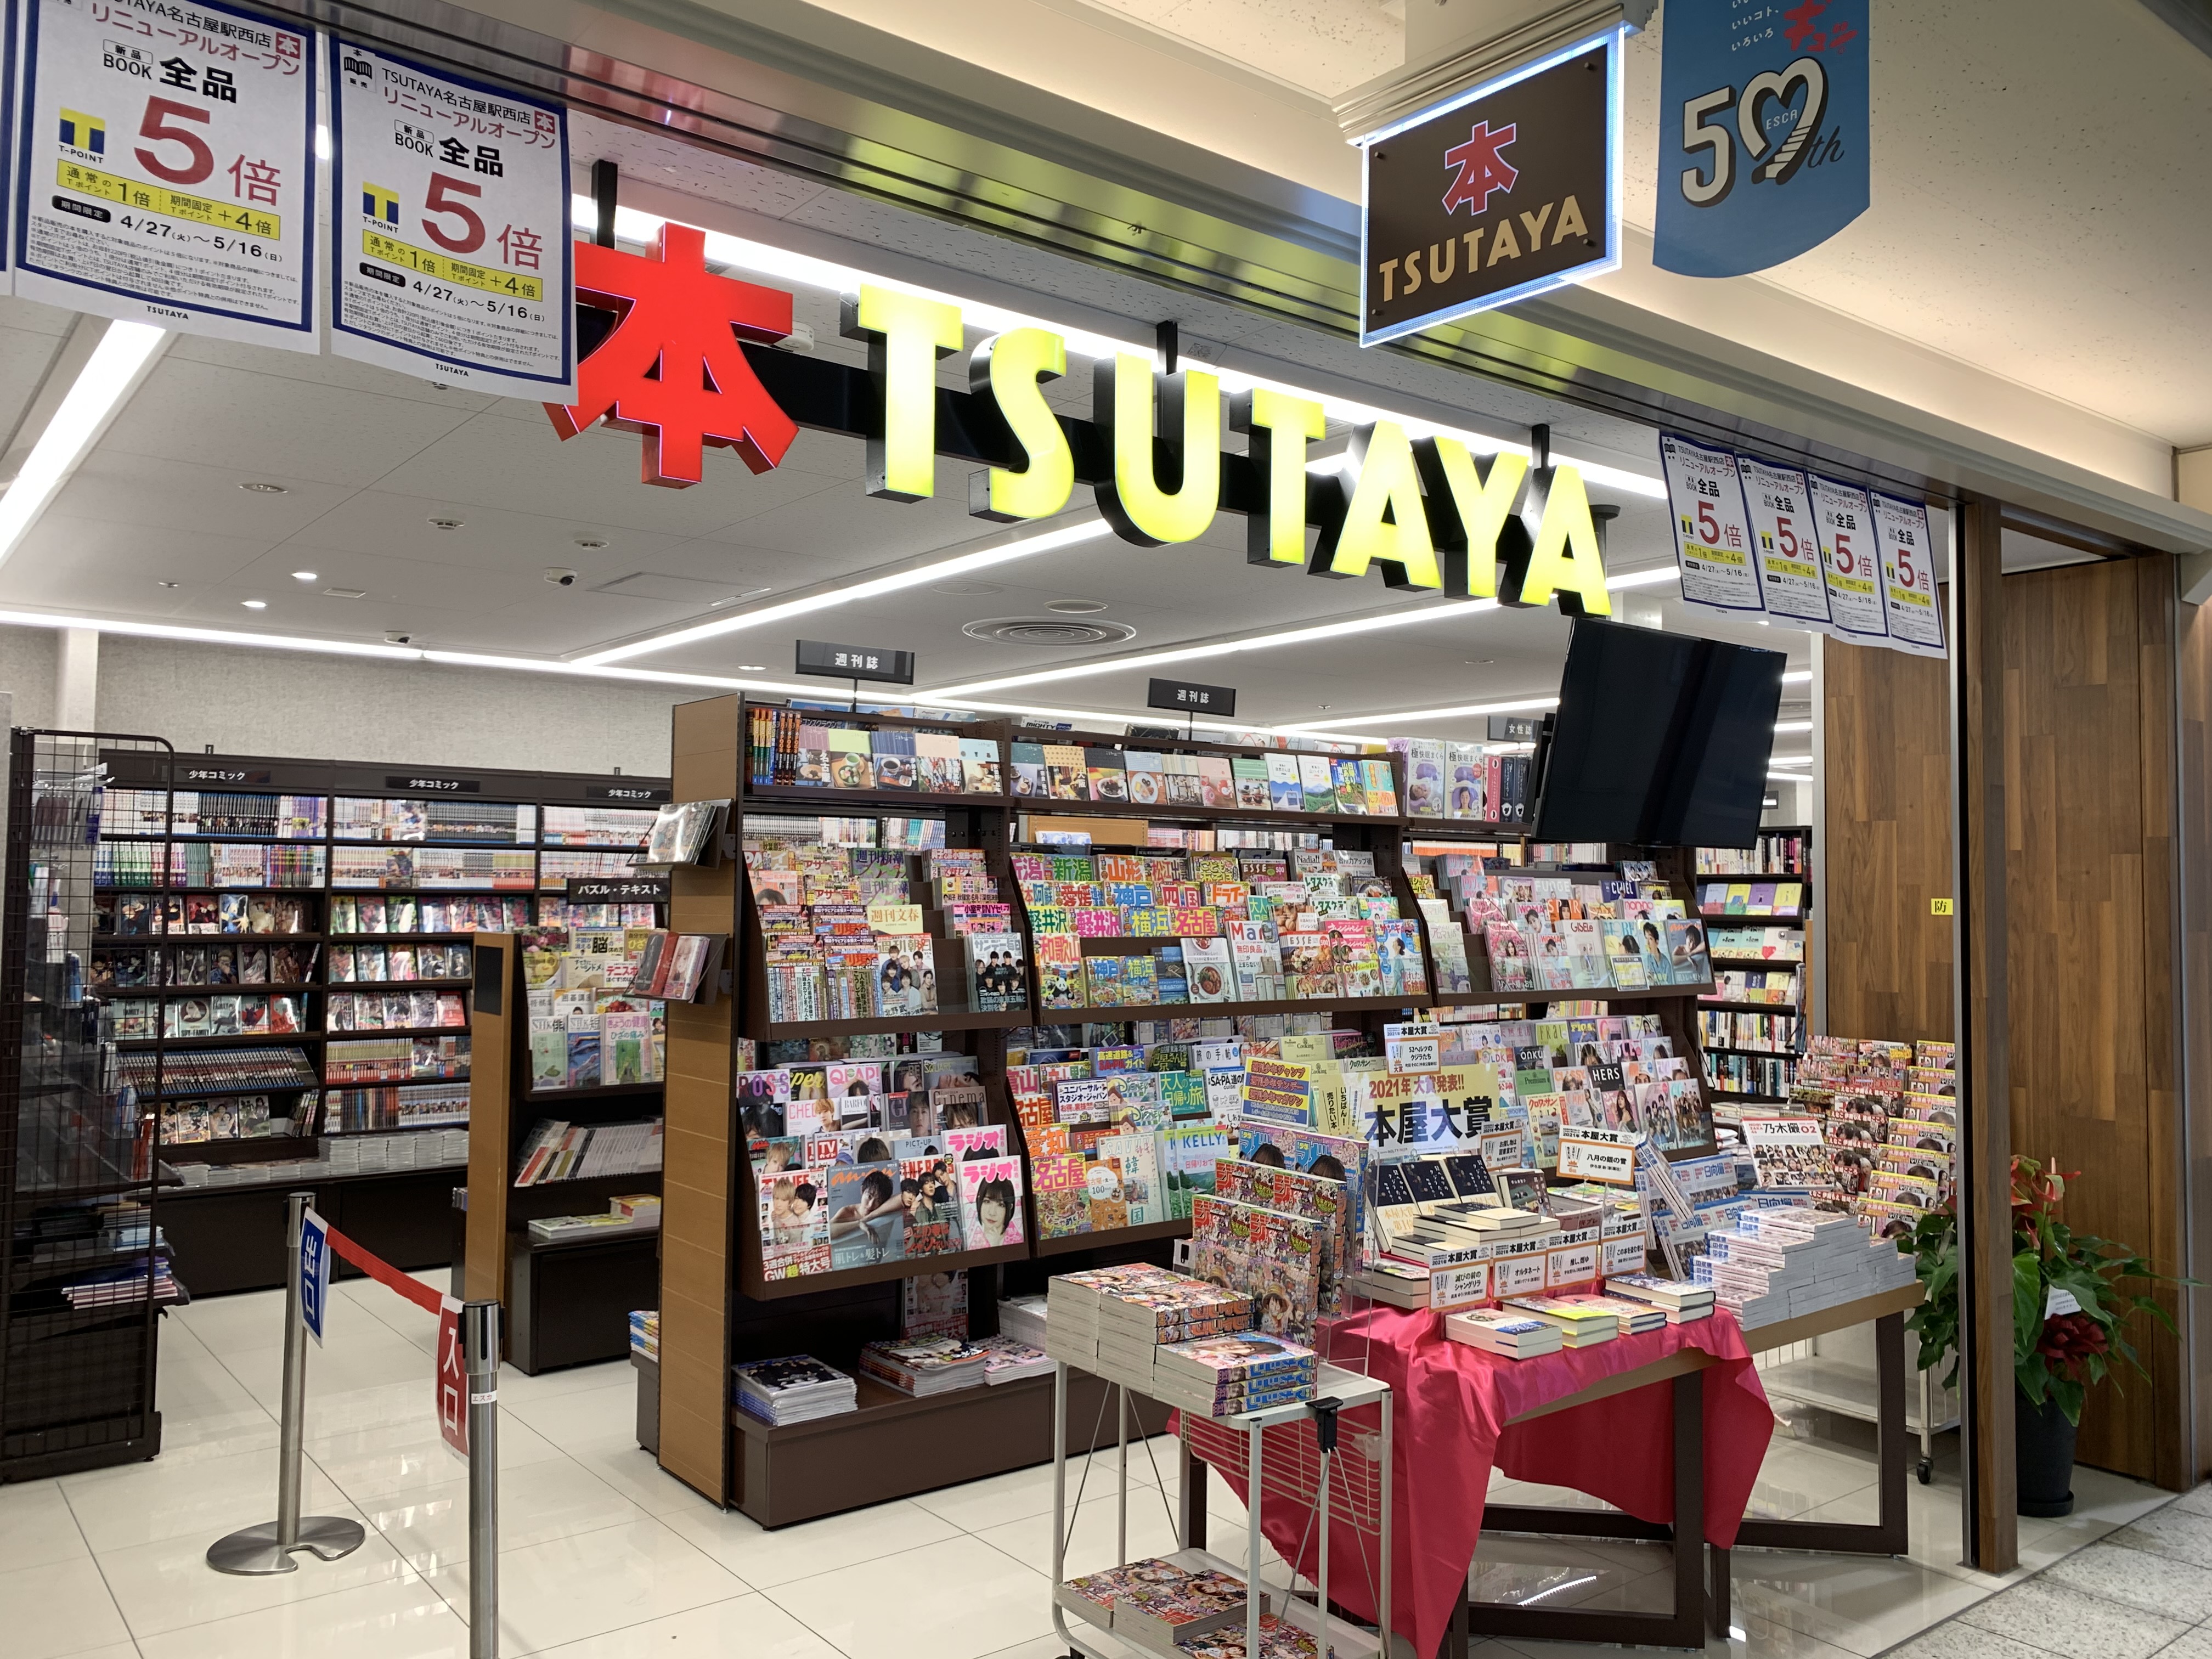 Tsutaya 名古屋駅西店 4月27日 火 に書籍売り場を エスカ地下街に移転しリニューアルオープン Ccc 蔦屋書店カンパニーのプレスリリース